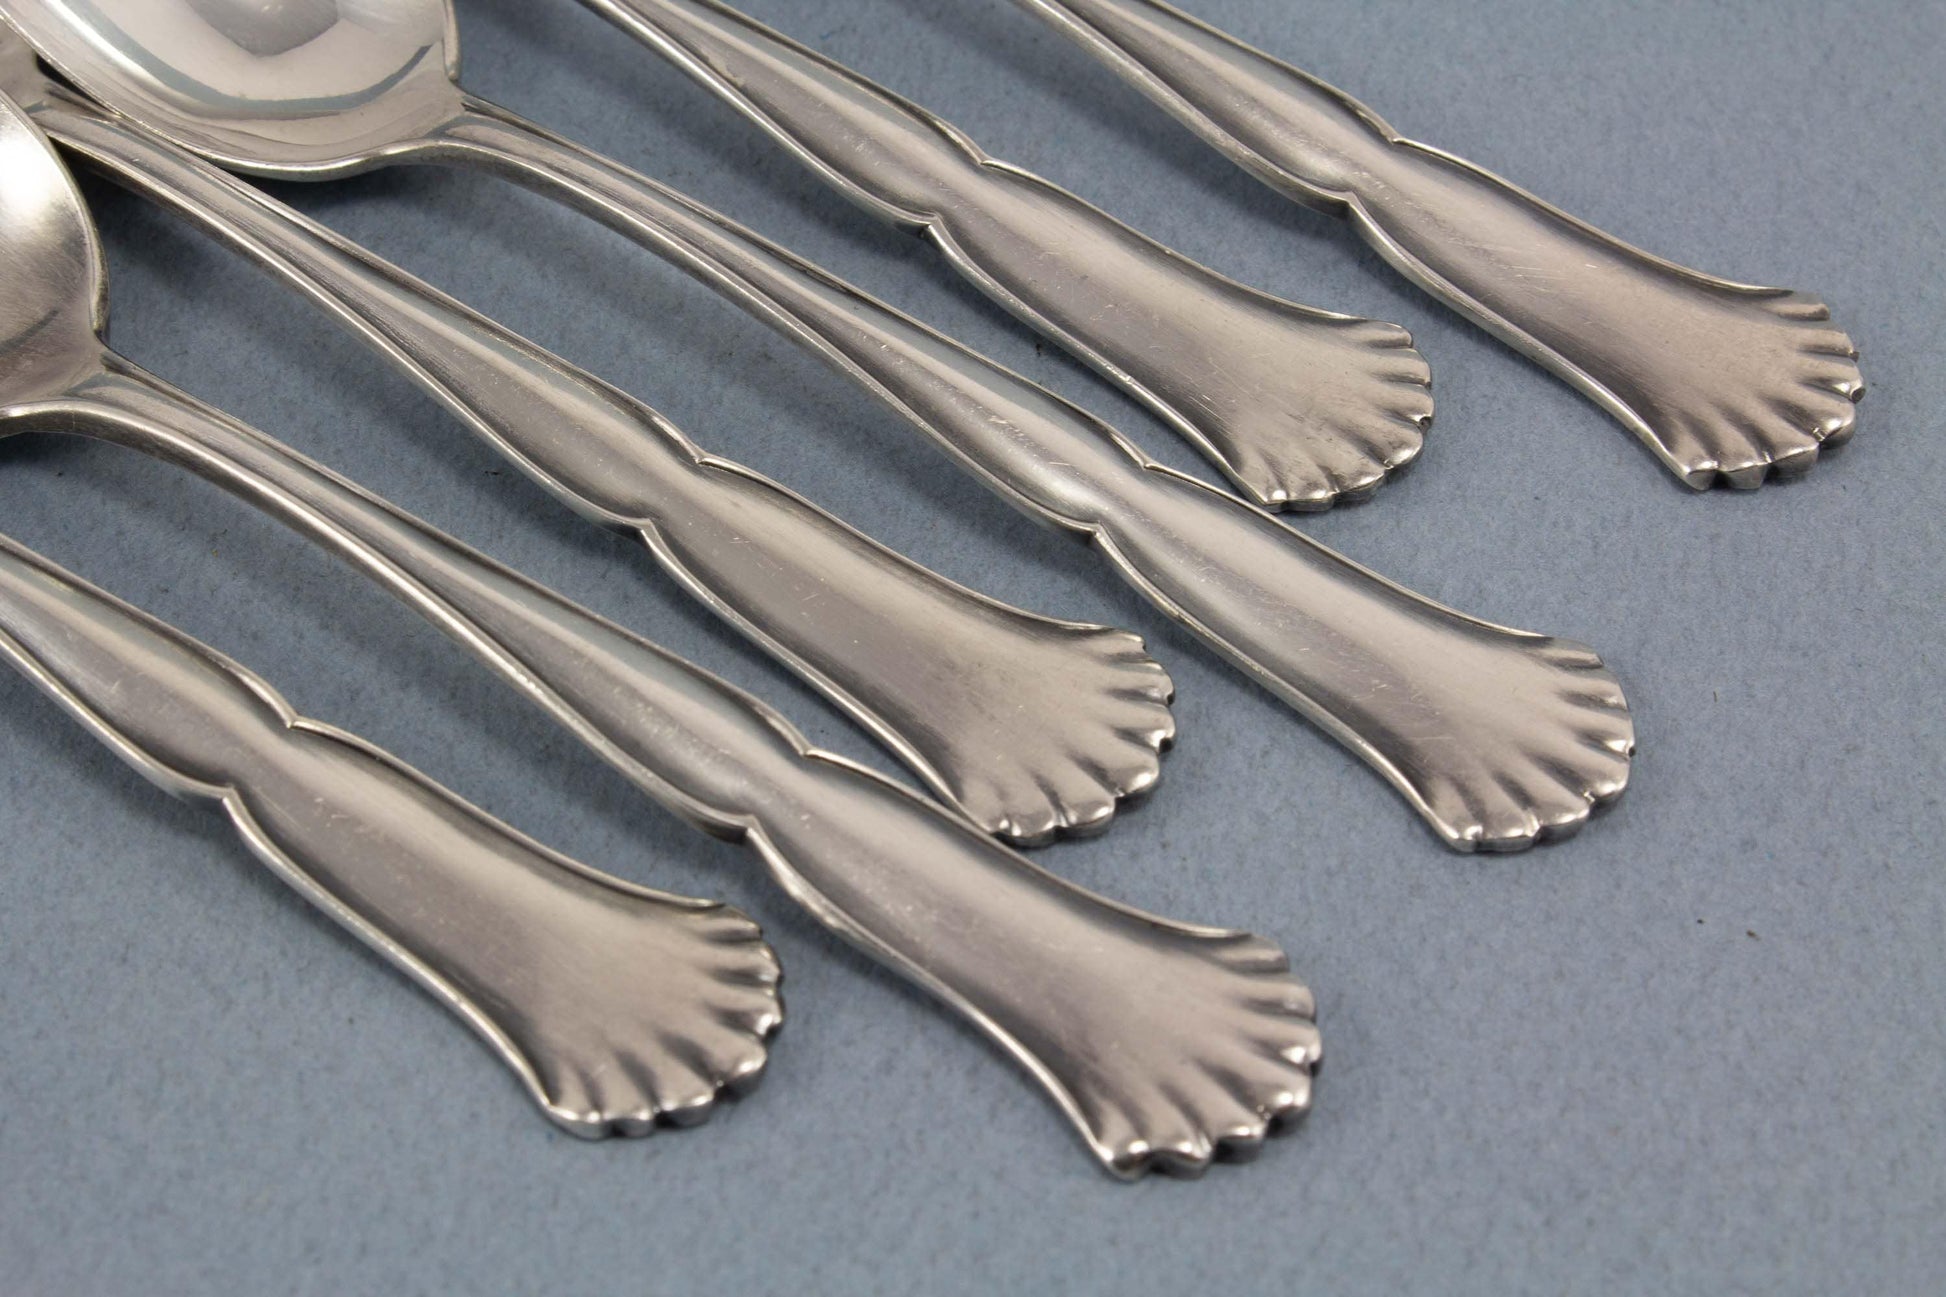 6 rare mocha spoons from Wellner